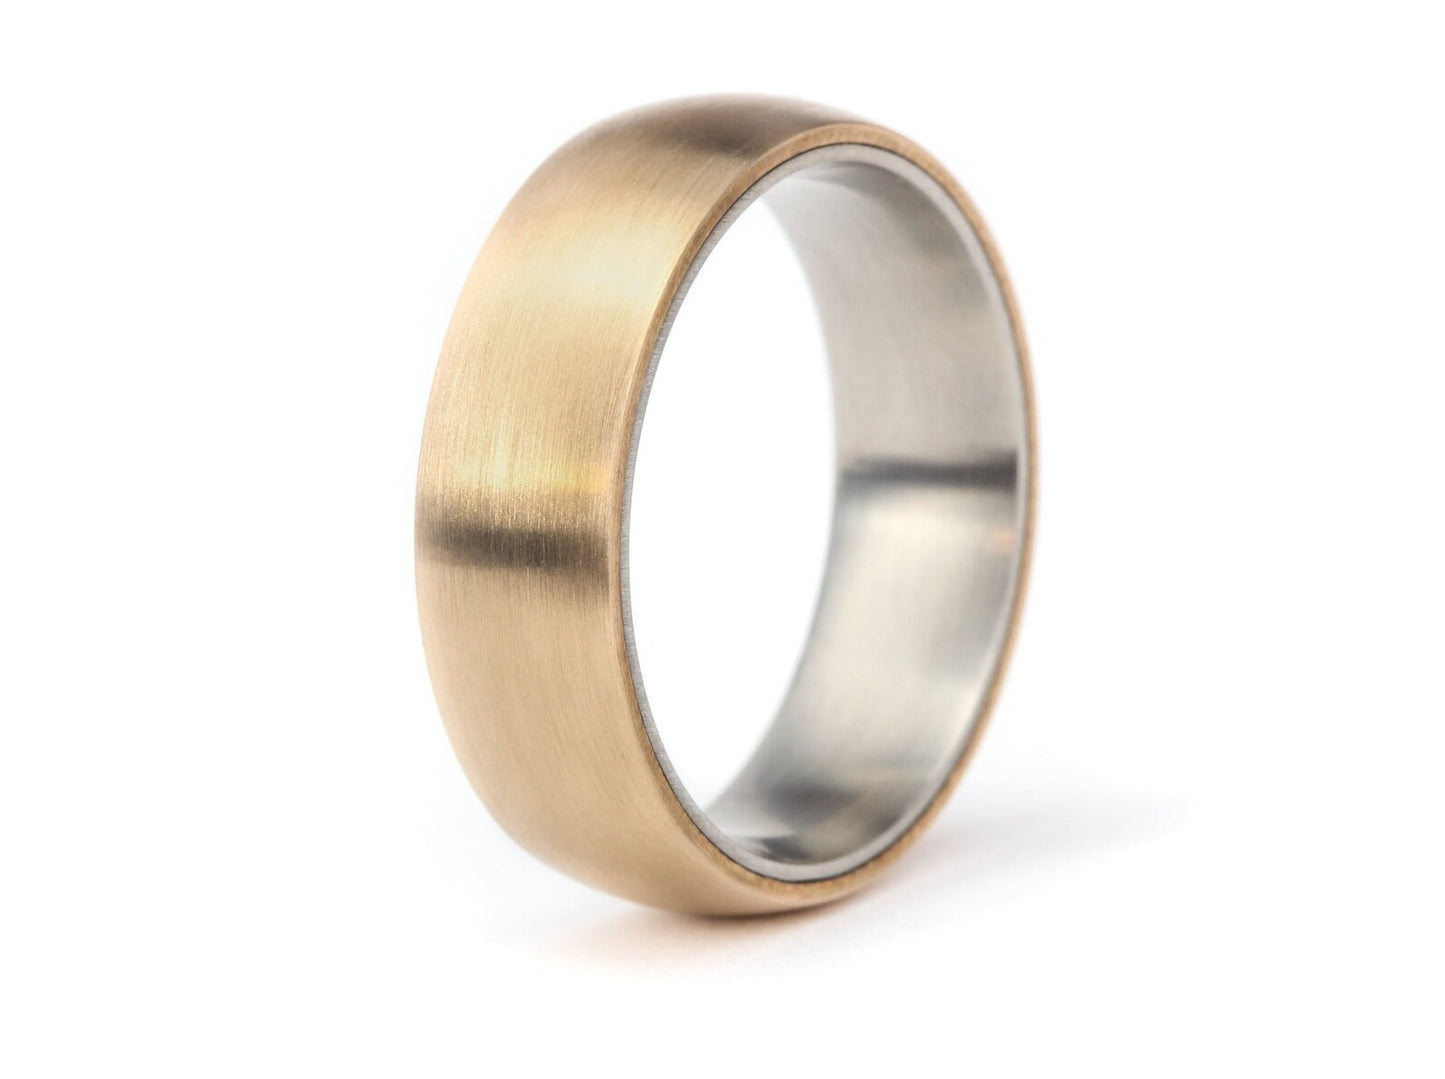 X234 Custom Ring Set: Couples "Wilde" Hammered Rings 